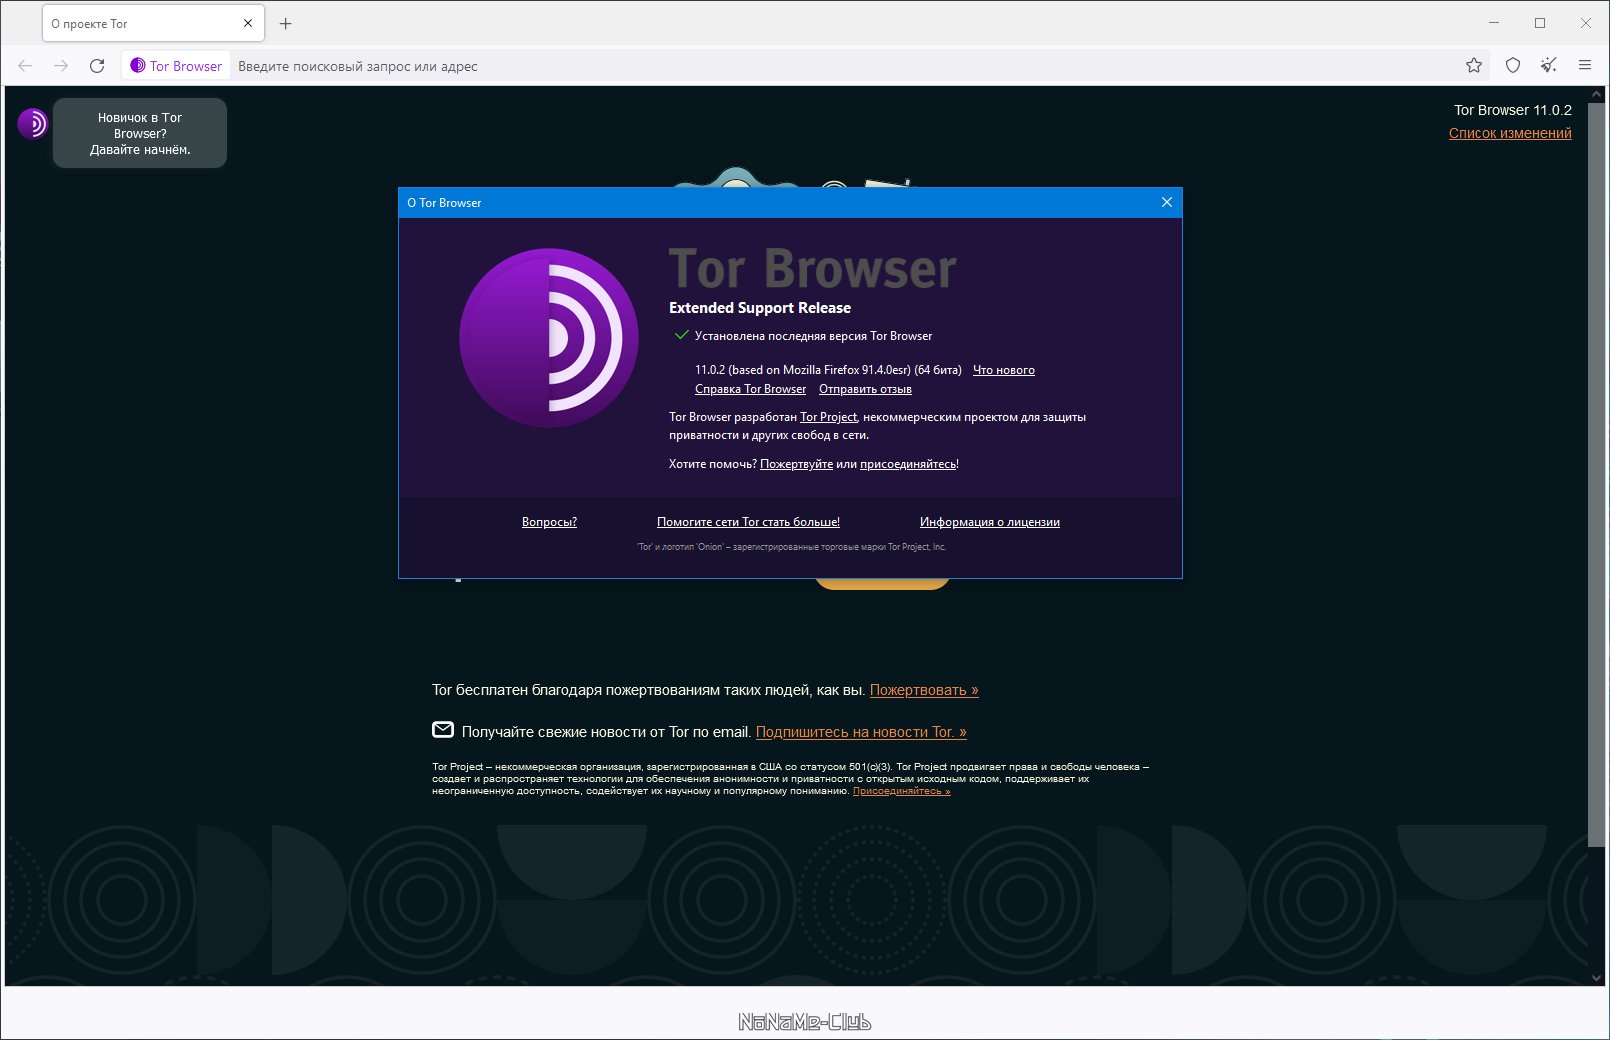 Tor im browser bundle скачать даркнет blacksprut disable javascript даркнет